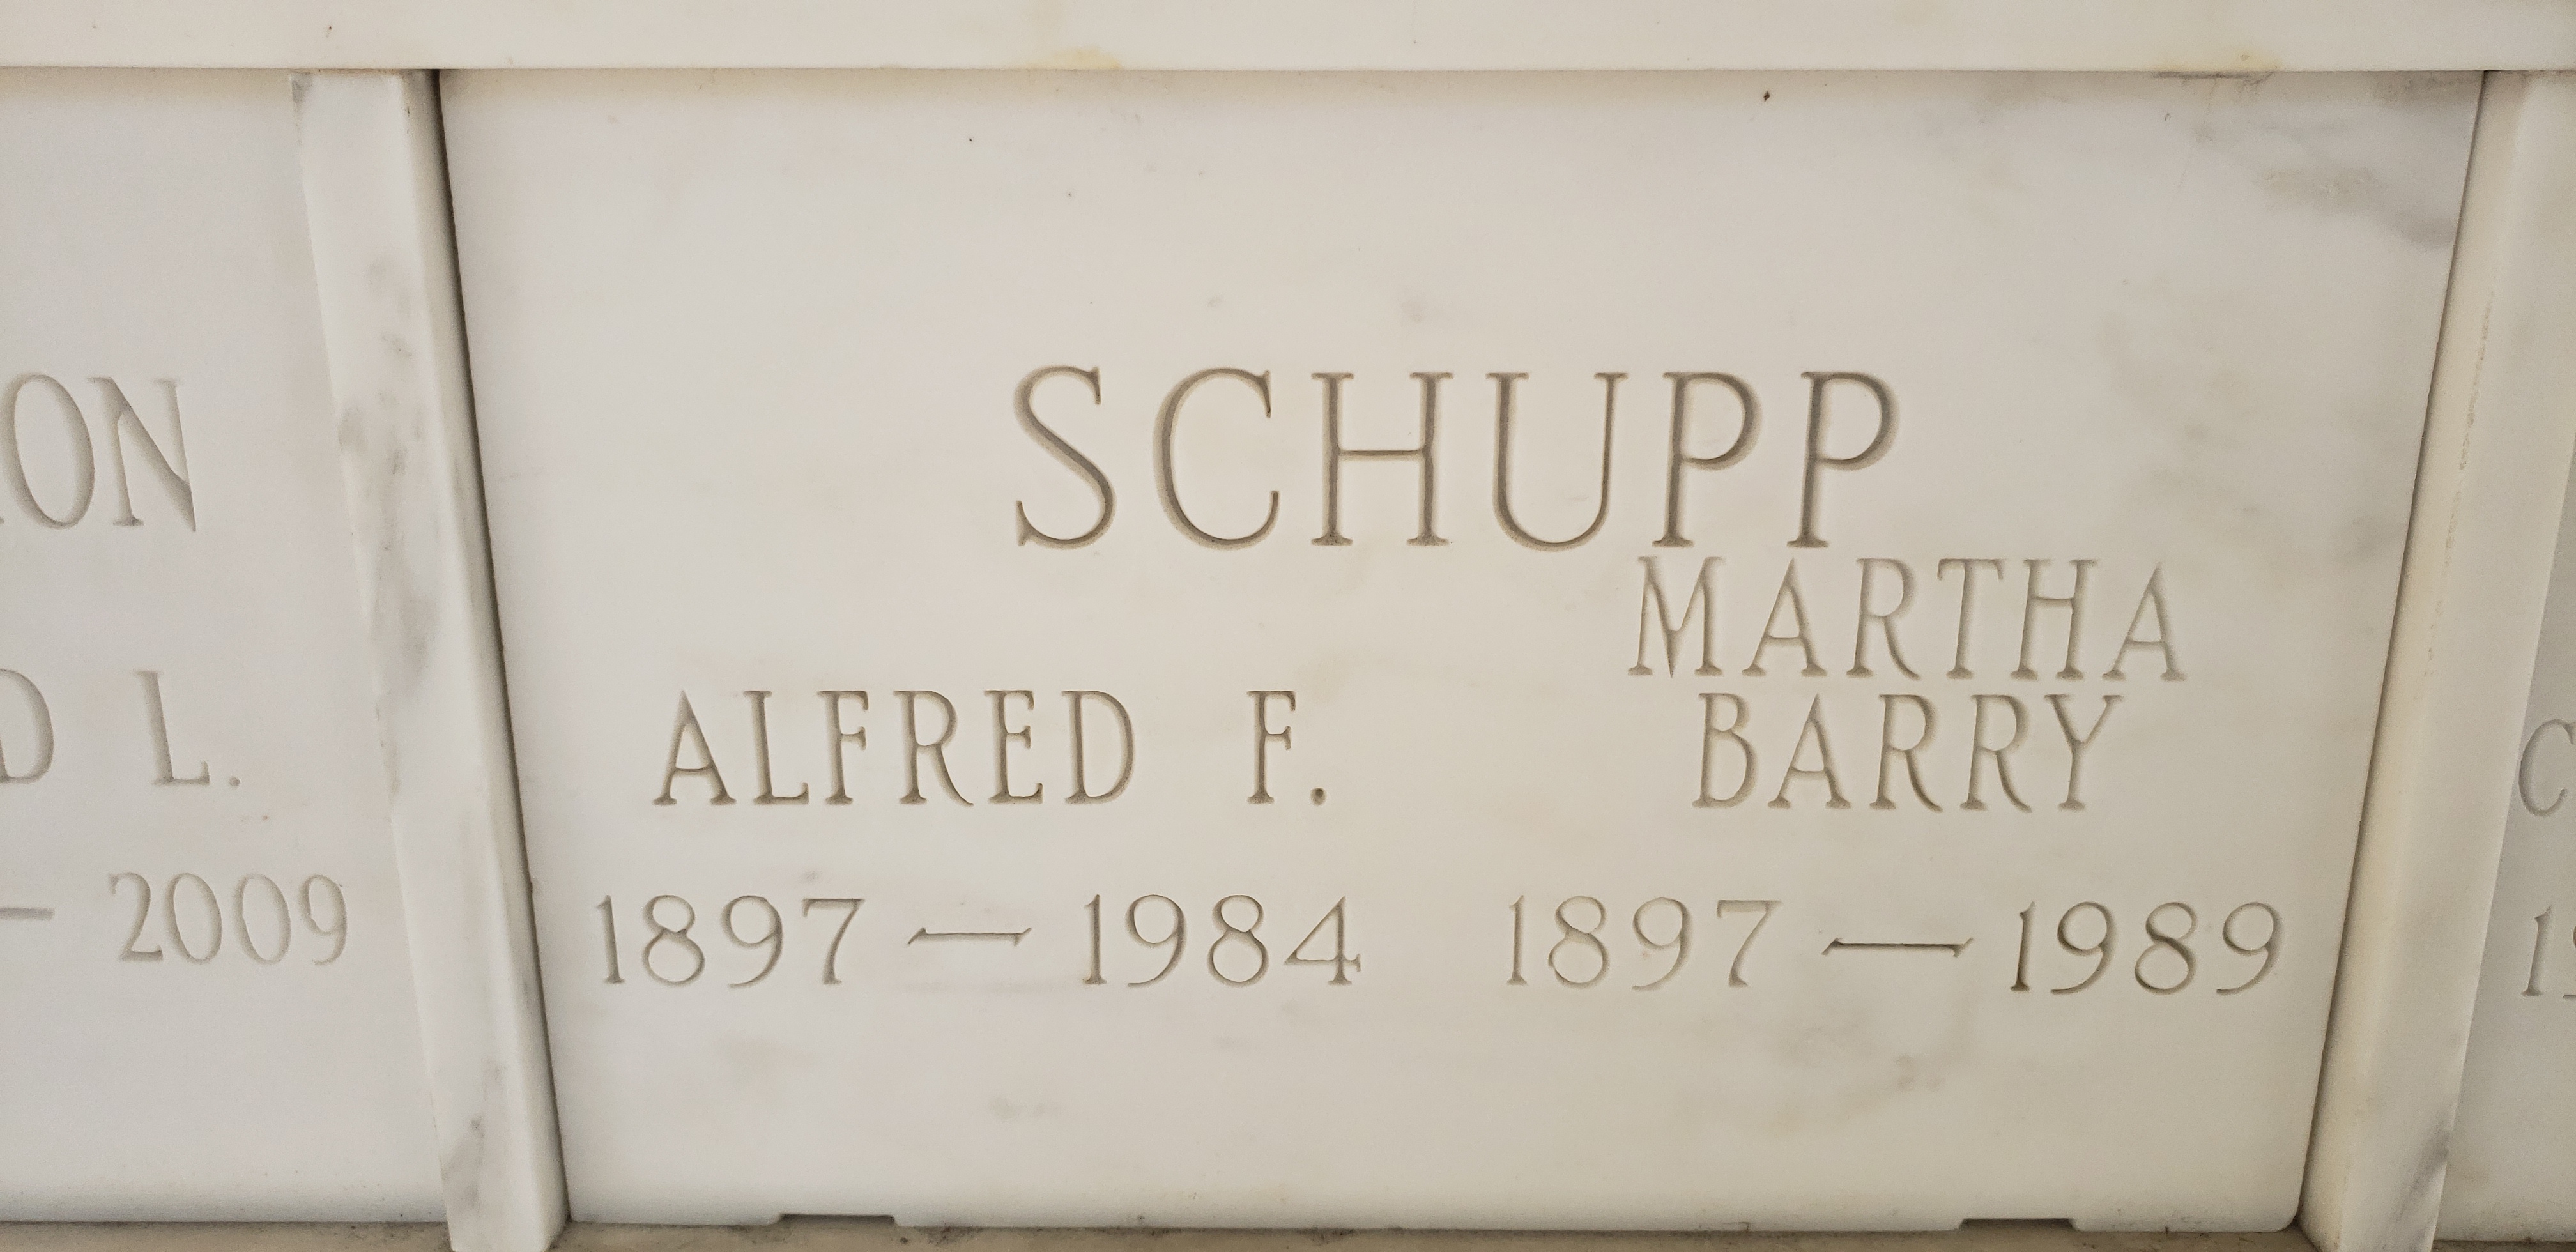 Martha Barry Schupp